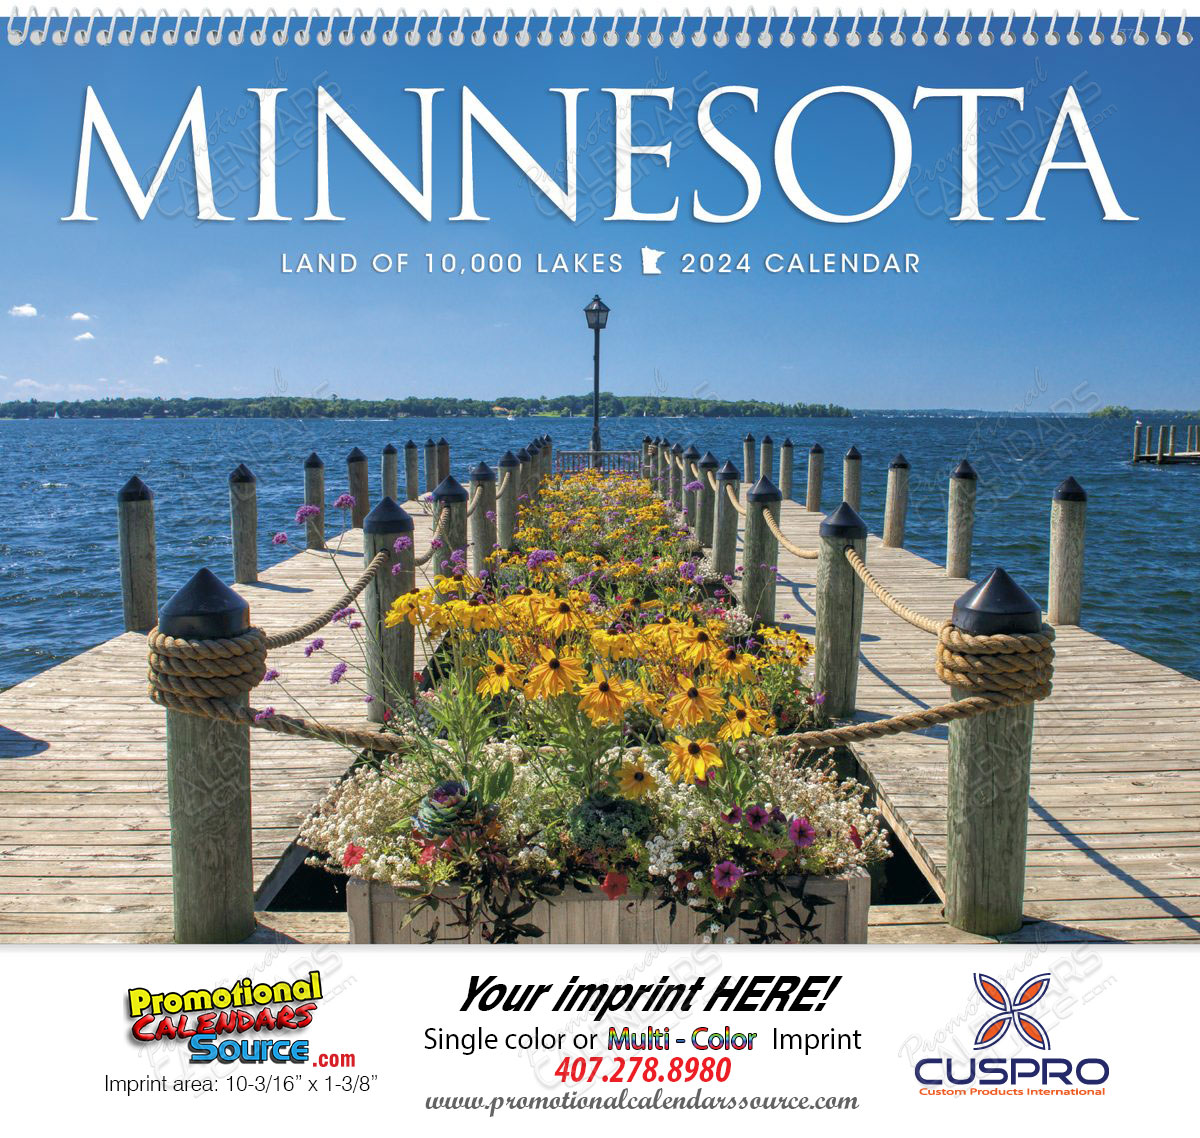 Minnesota State Promotional Calendar 